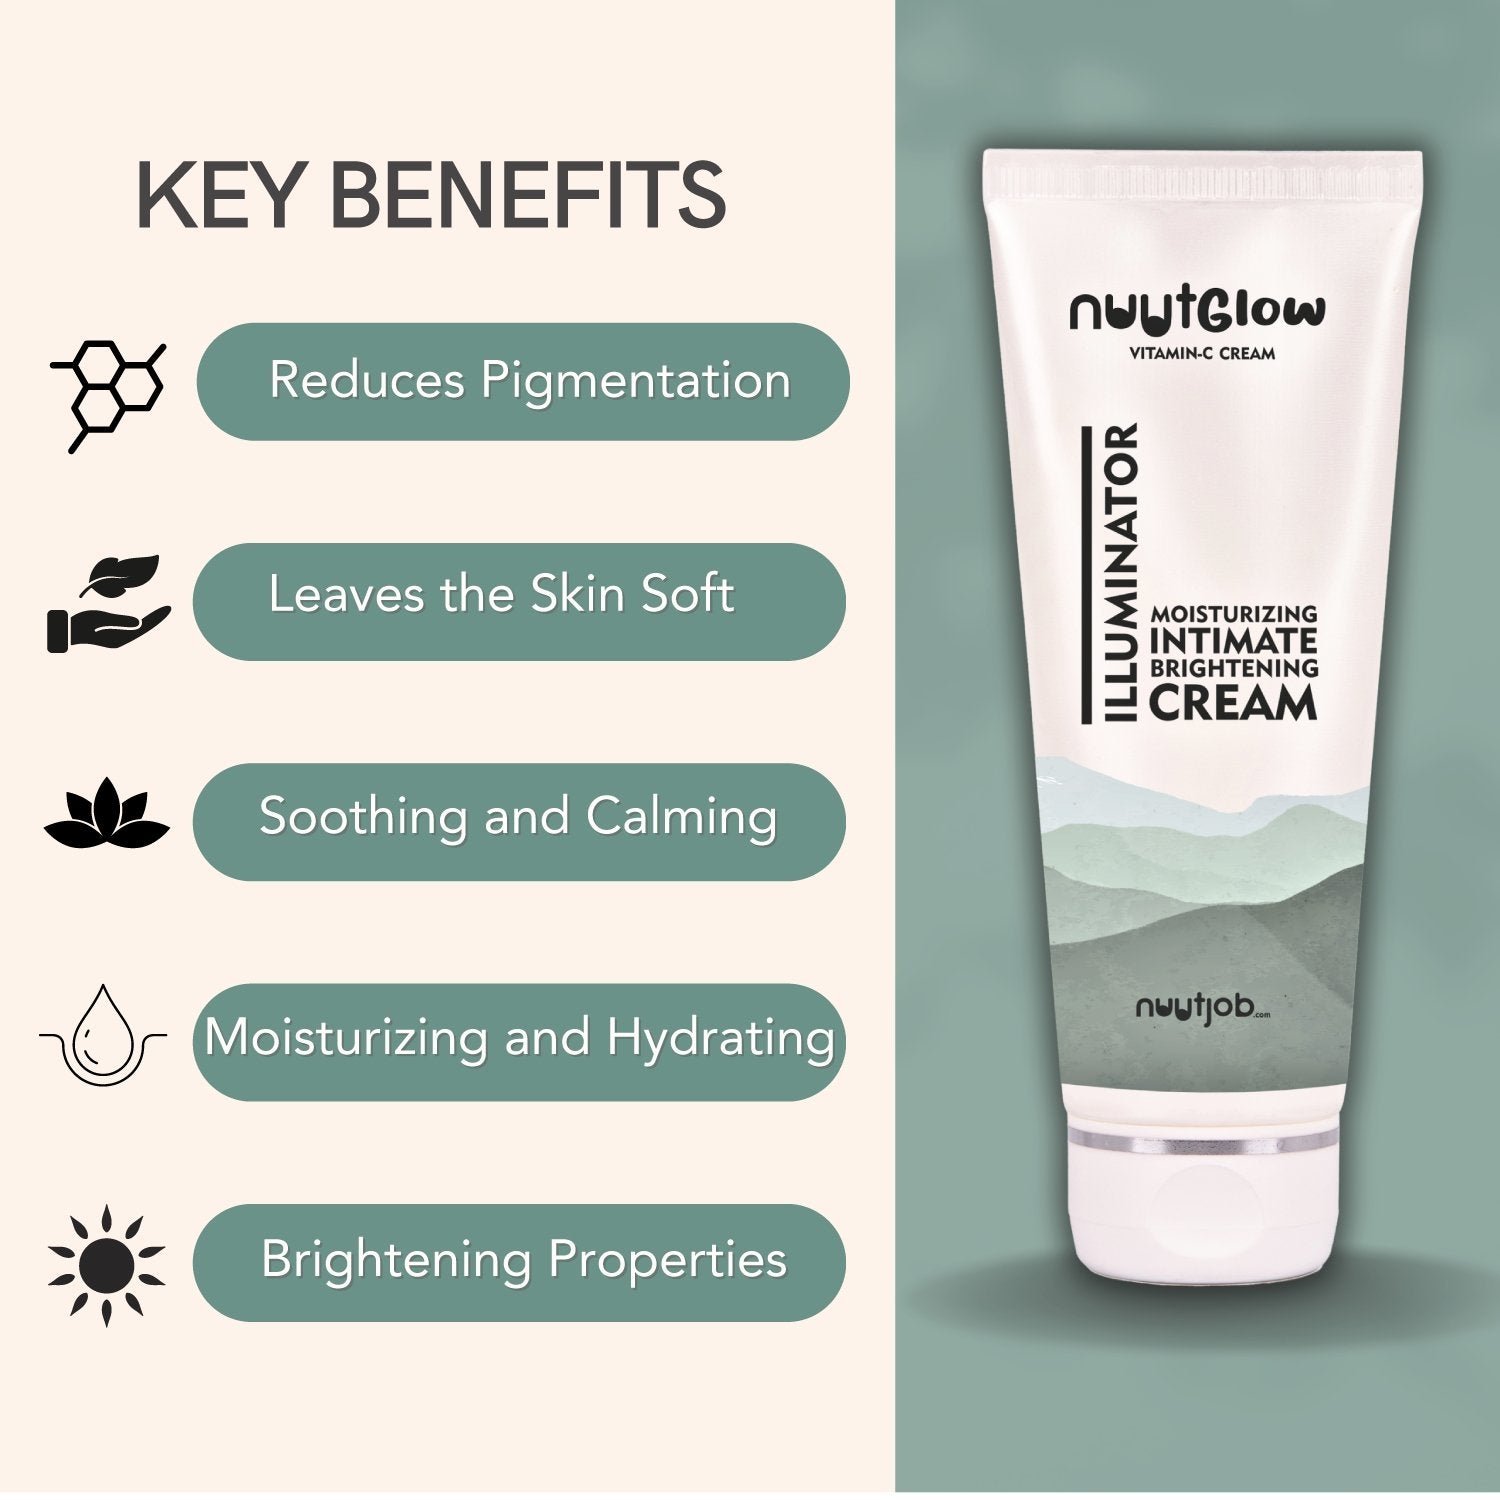 NuutGlow Vitamin C Brightening Cream | 100 ml + Nuutjob Hair Removal Spray 100ml COMBO - Nuutjob